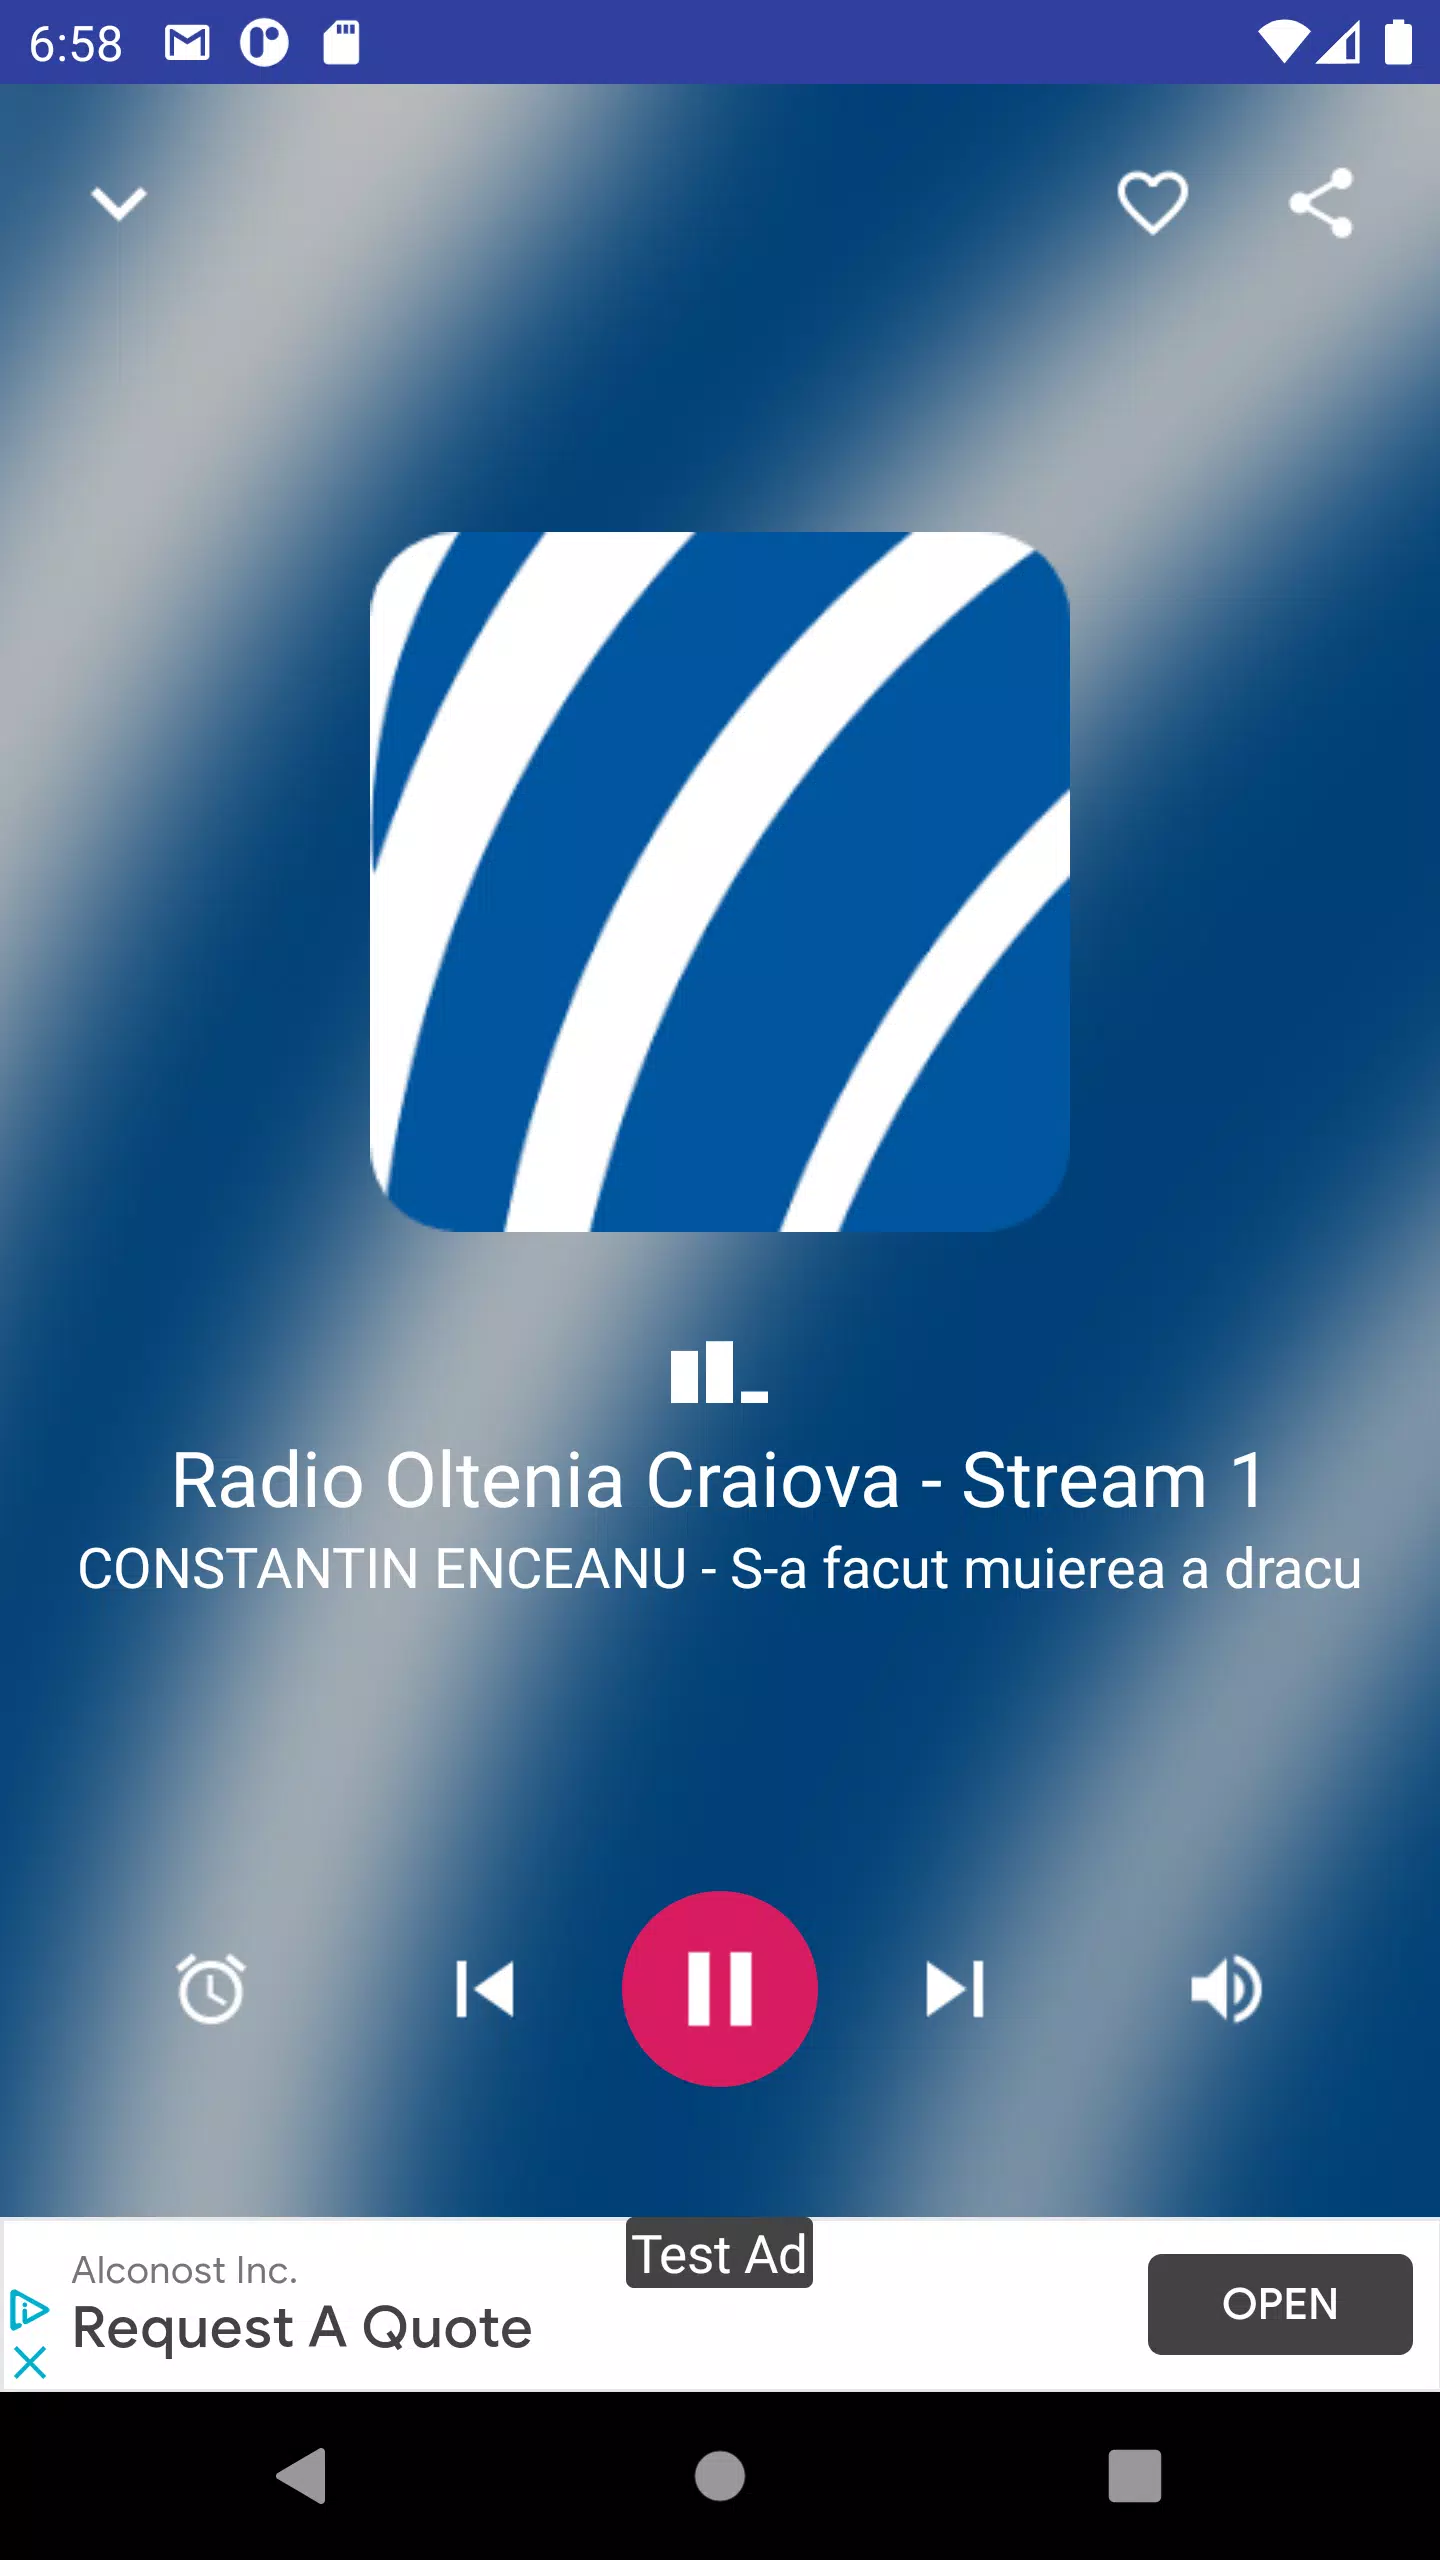 Radio Oltenia Craiova for Android - APK Download